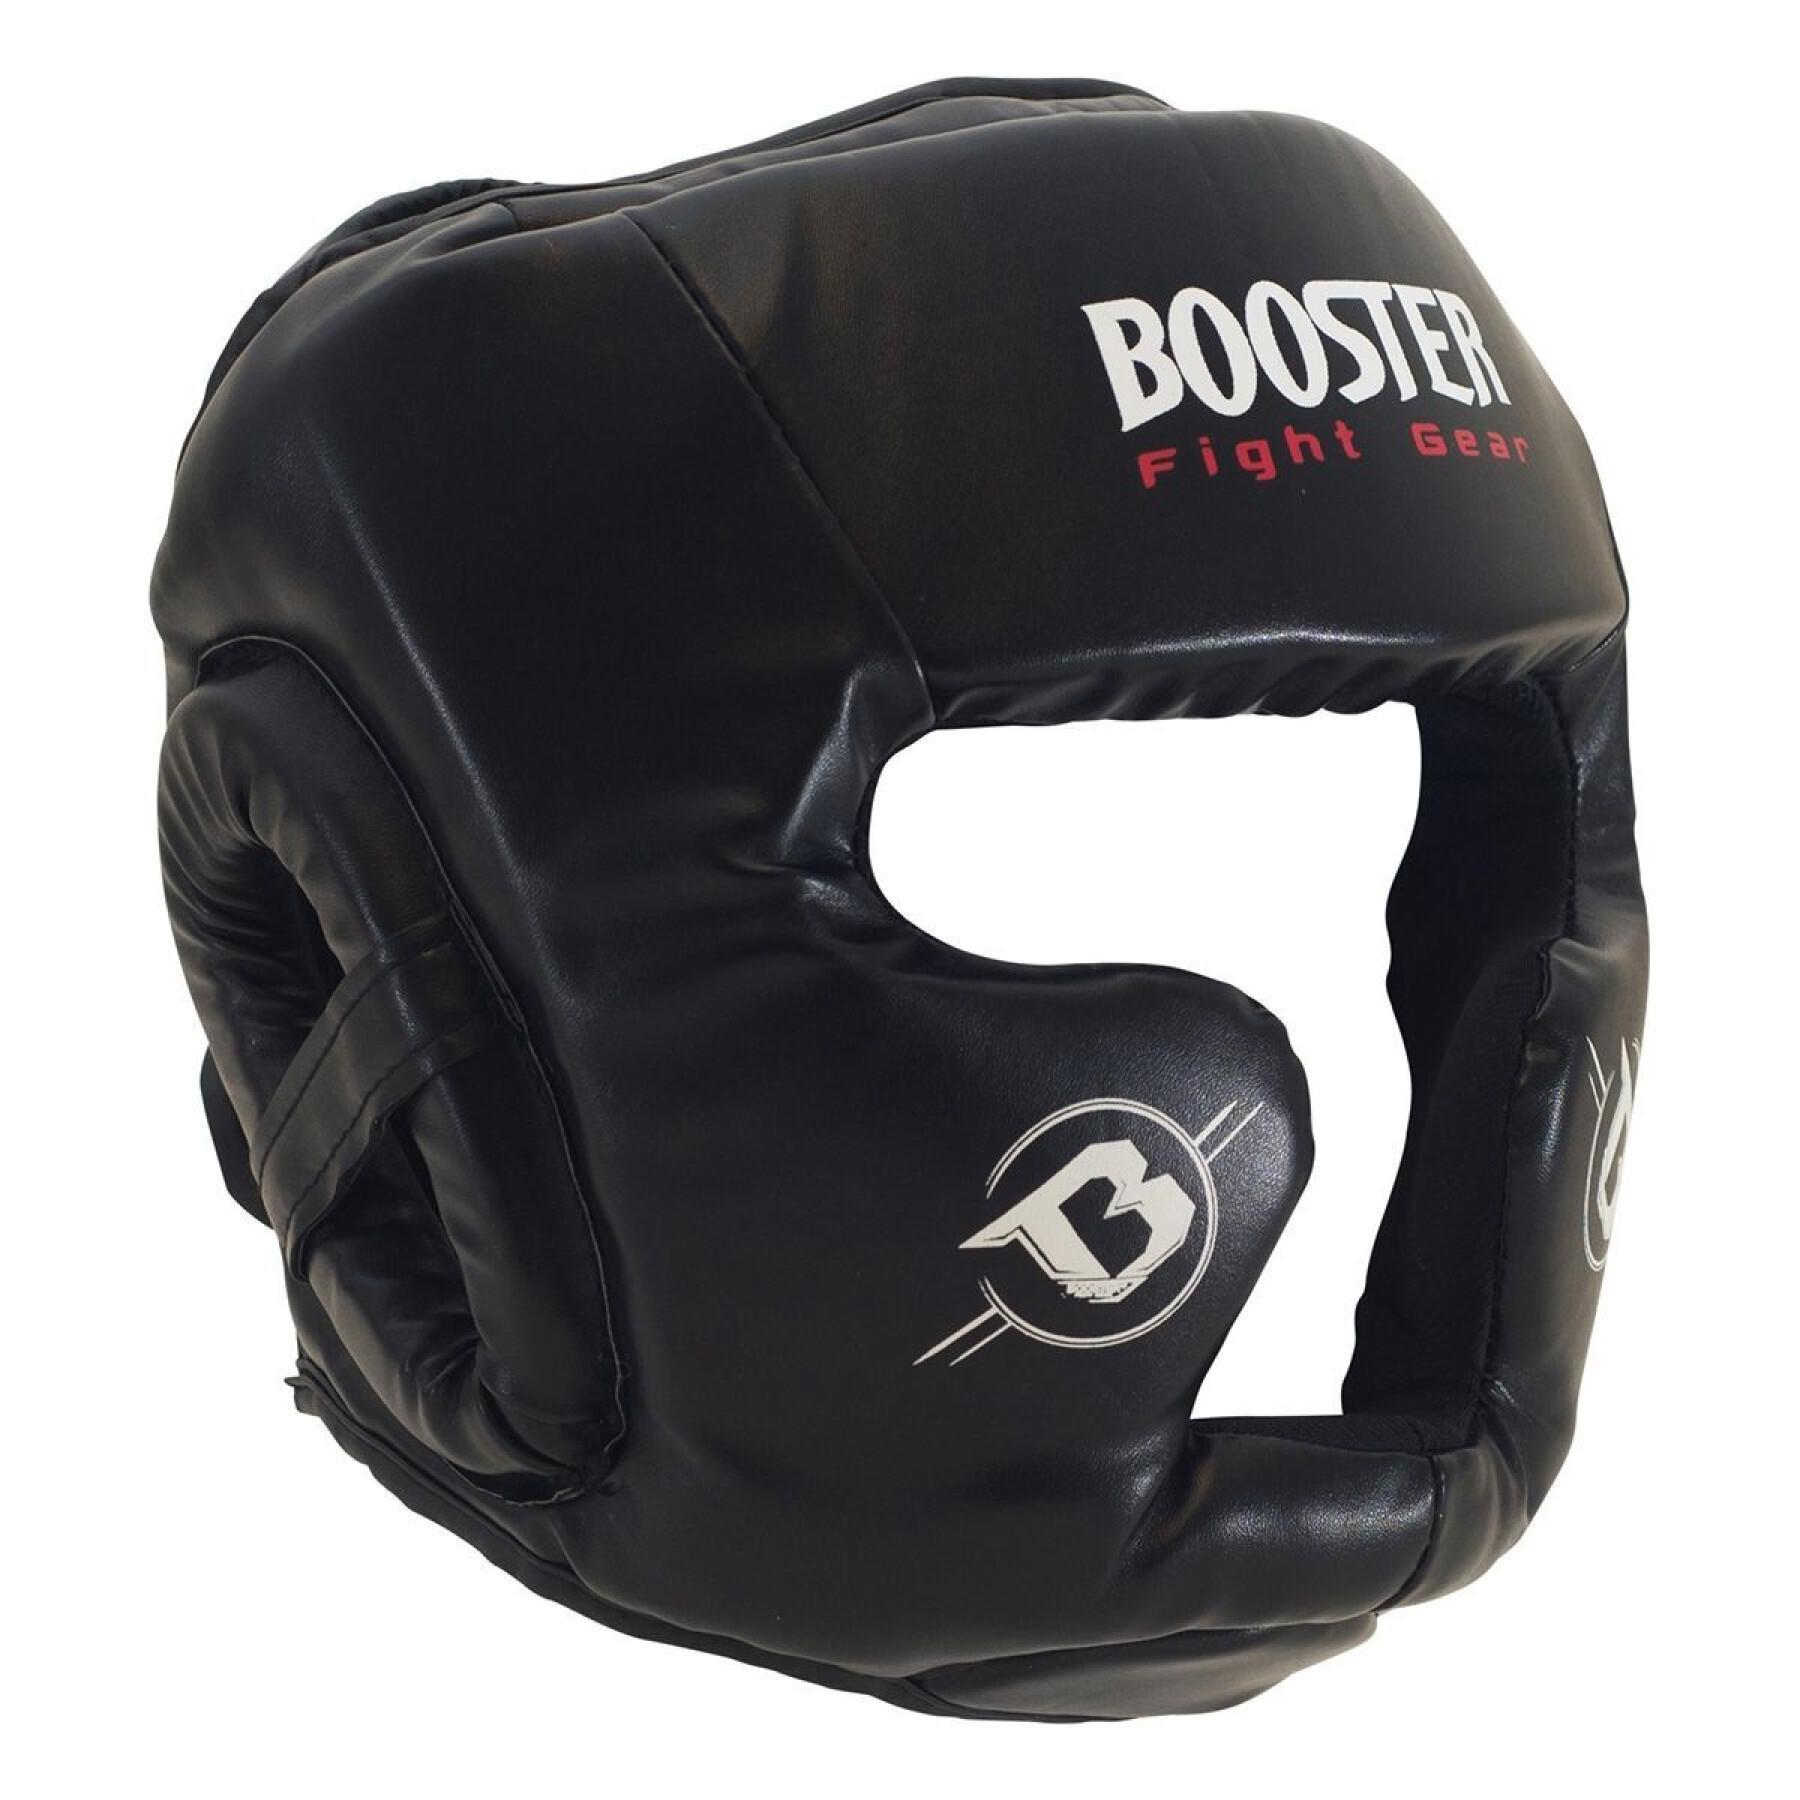 Boxhelm Booster Fight Gear Hgl B 2